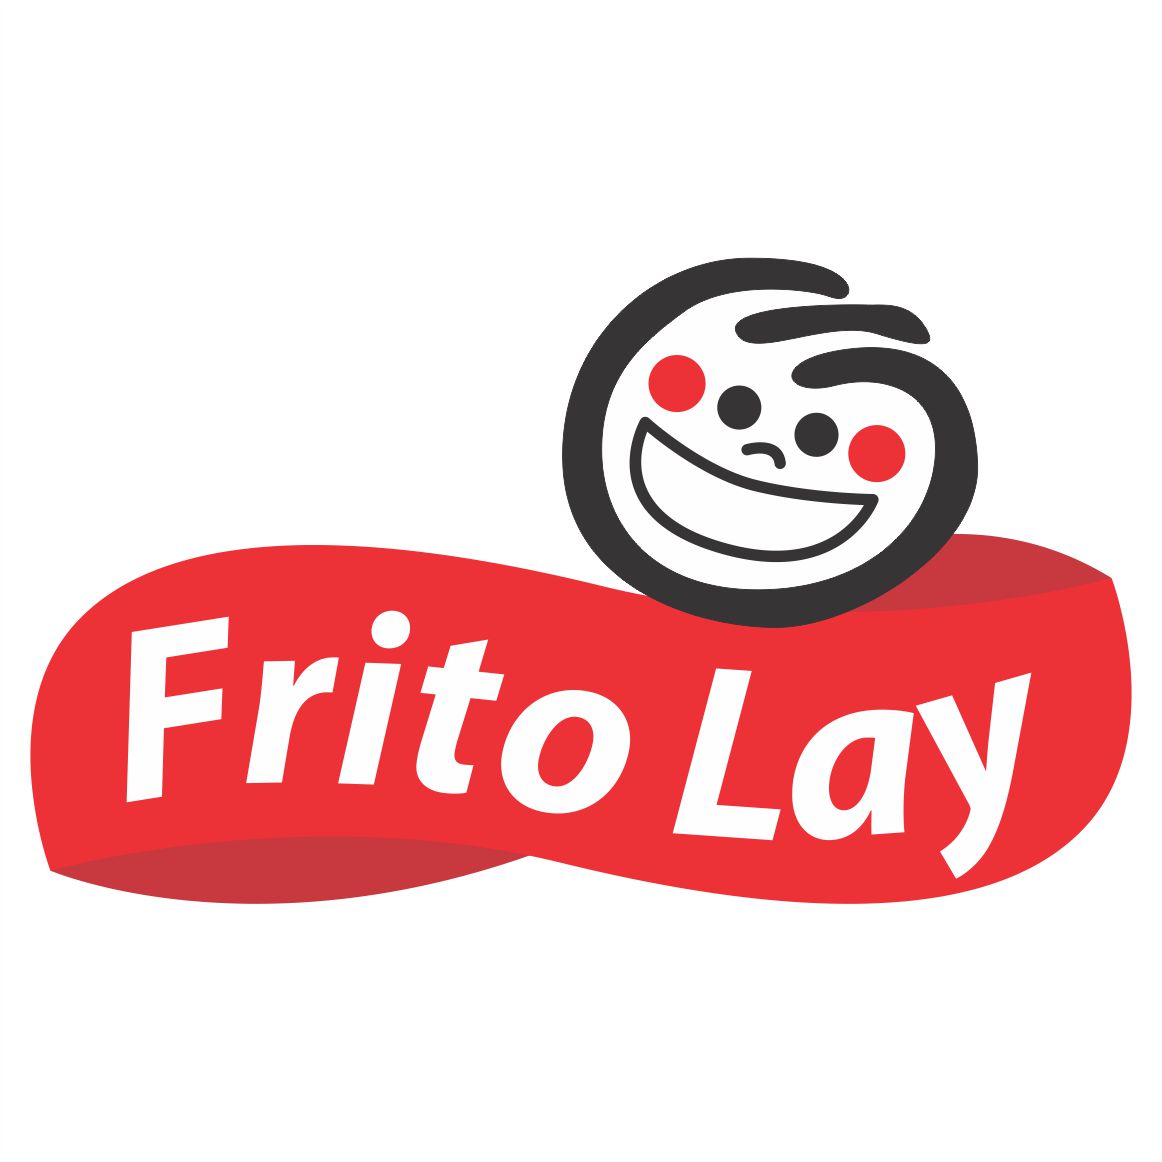 Share 118+ frito lay logo super hot - camera.edu.vn